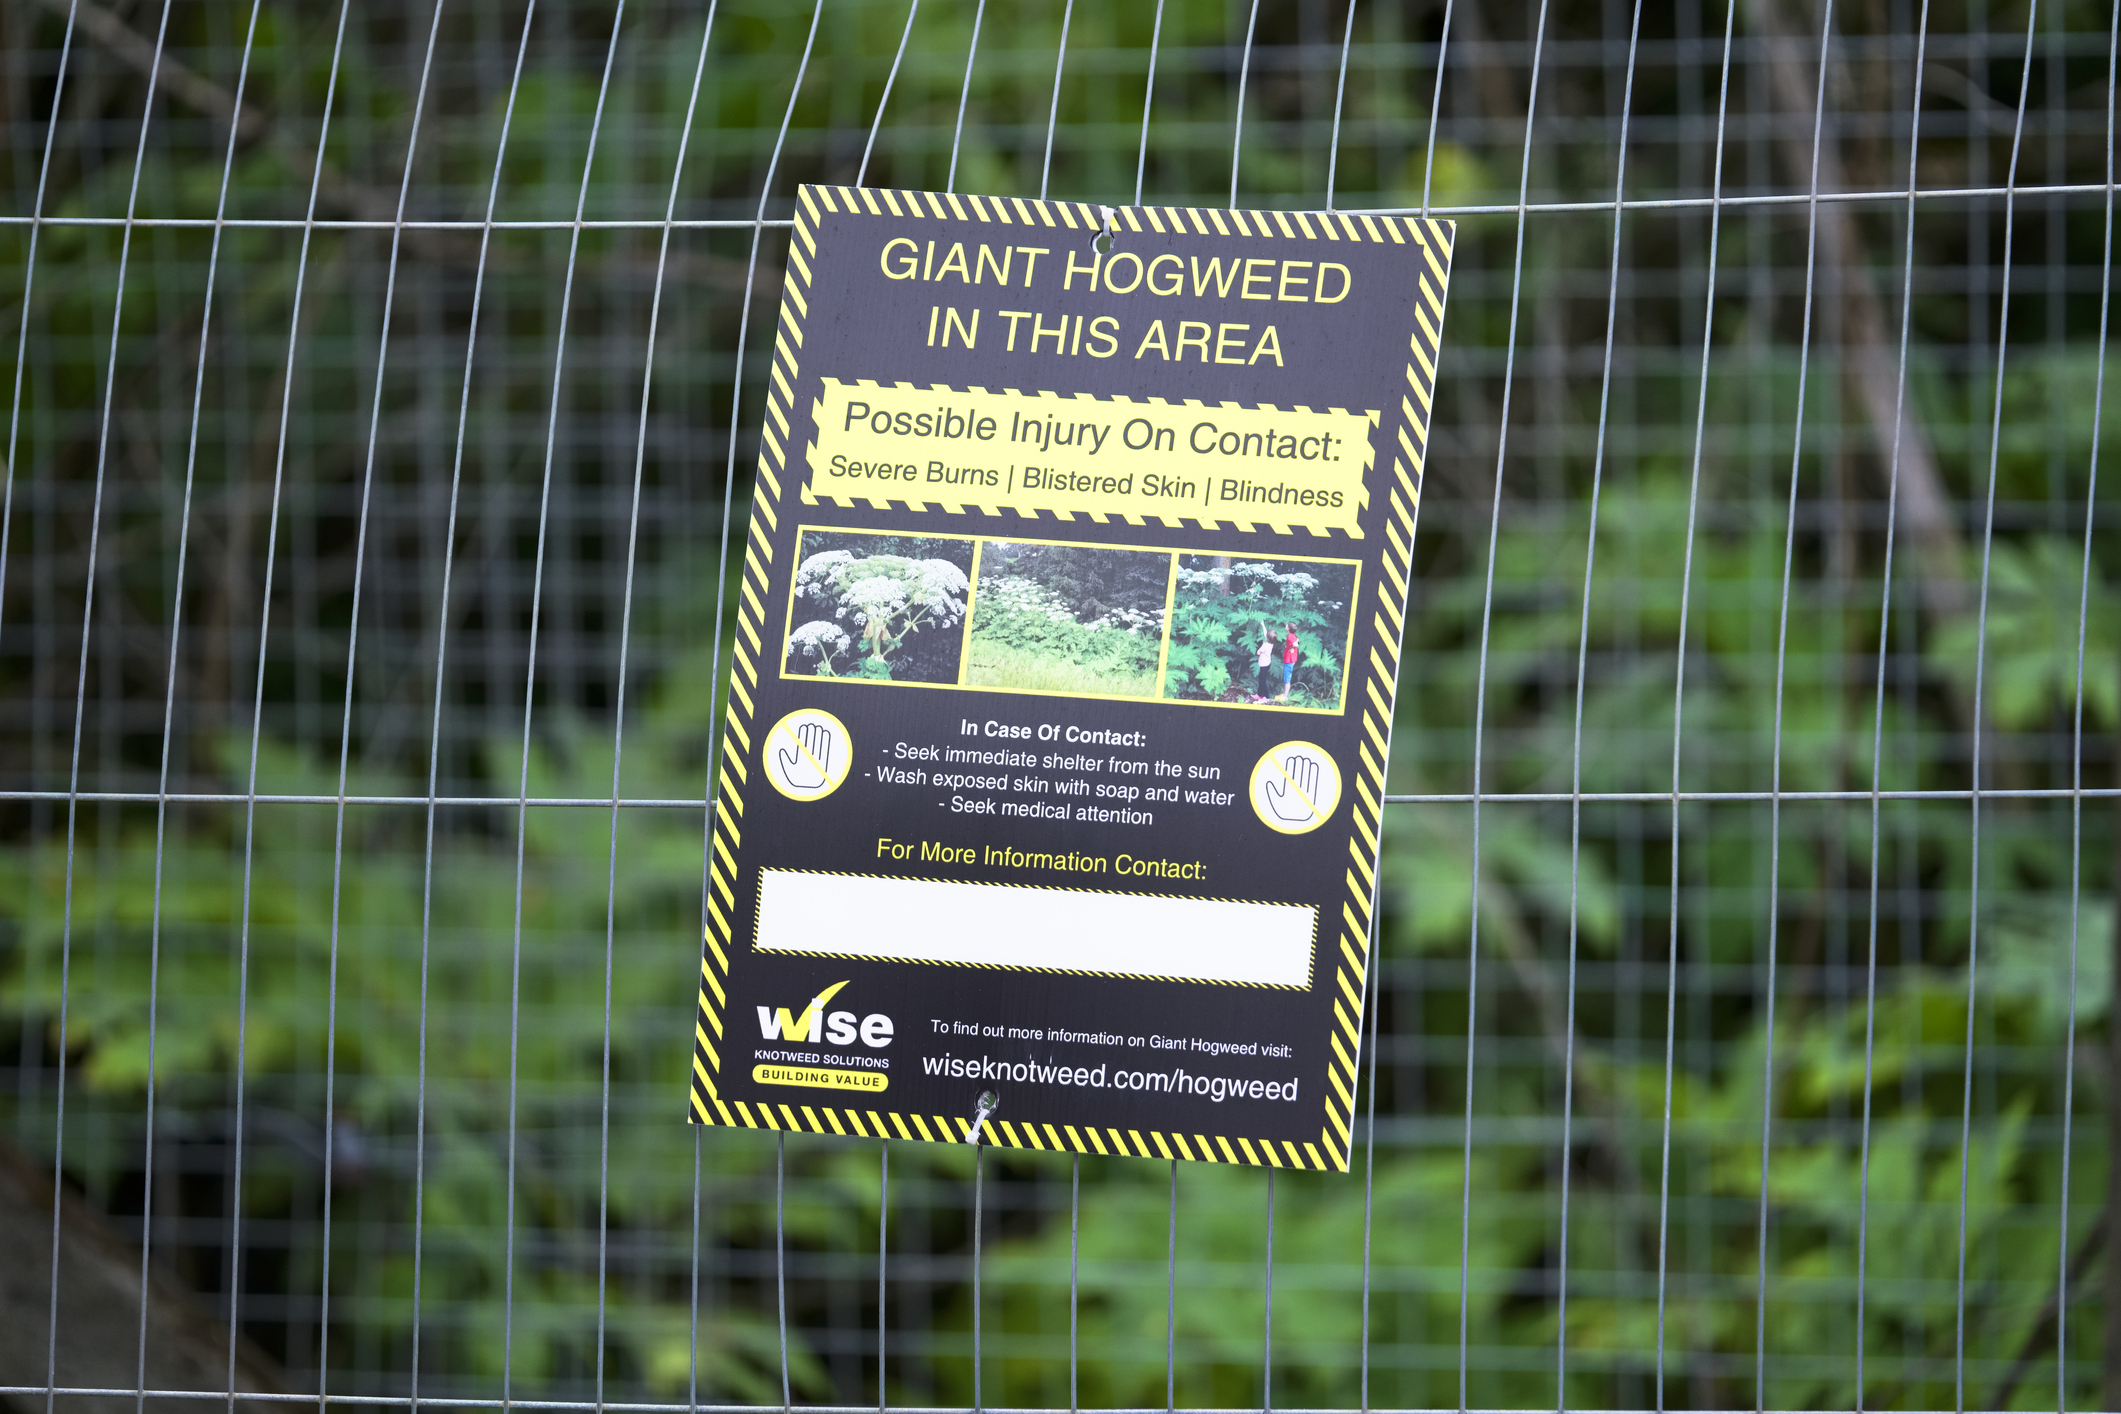 Giant Hogweed